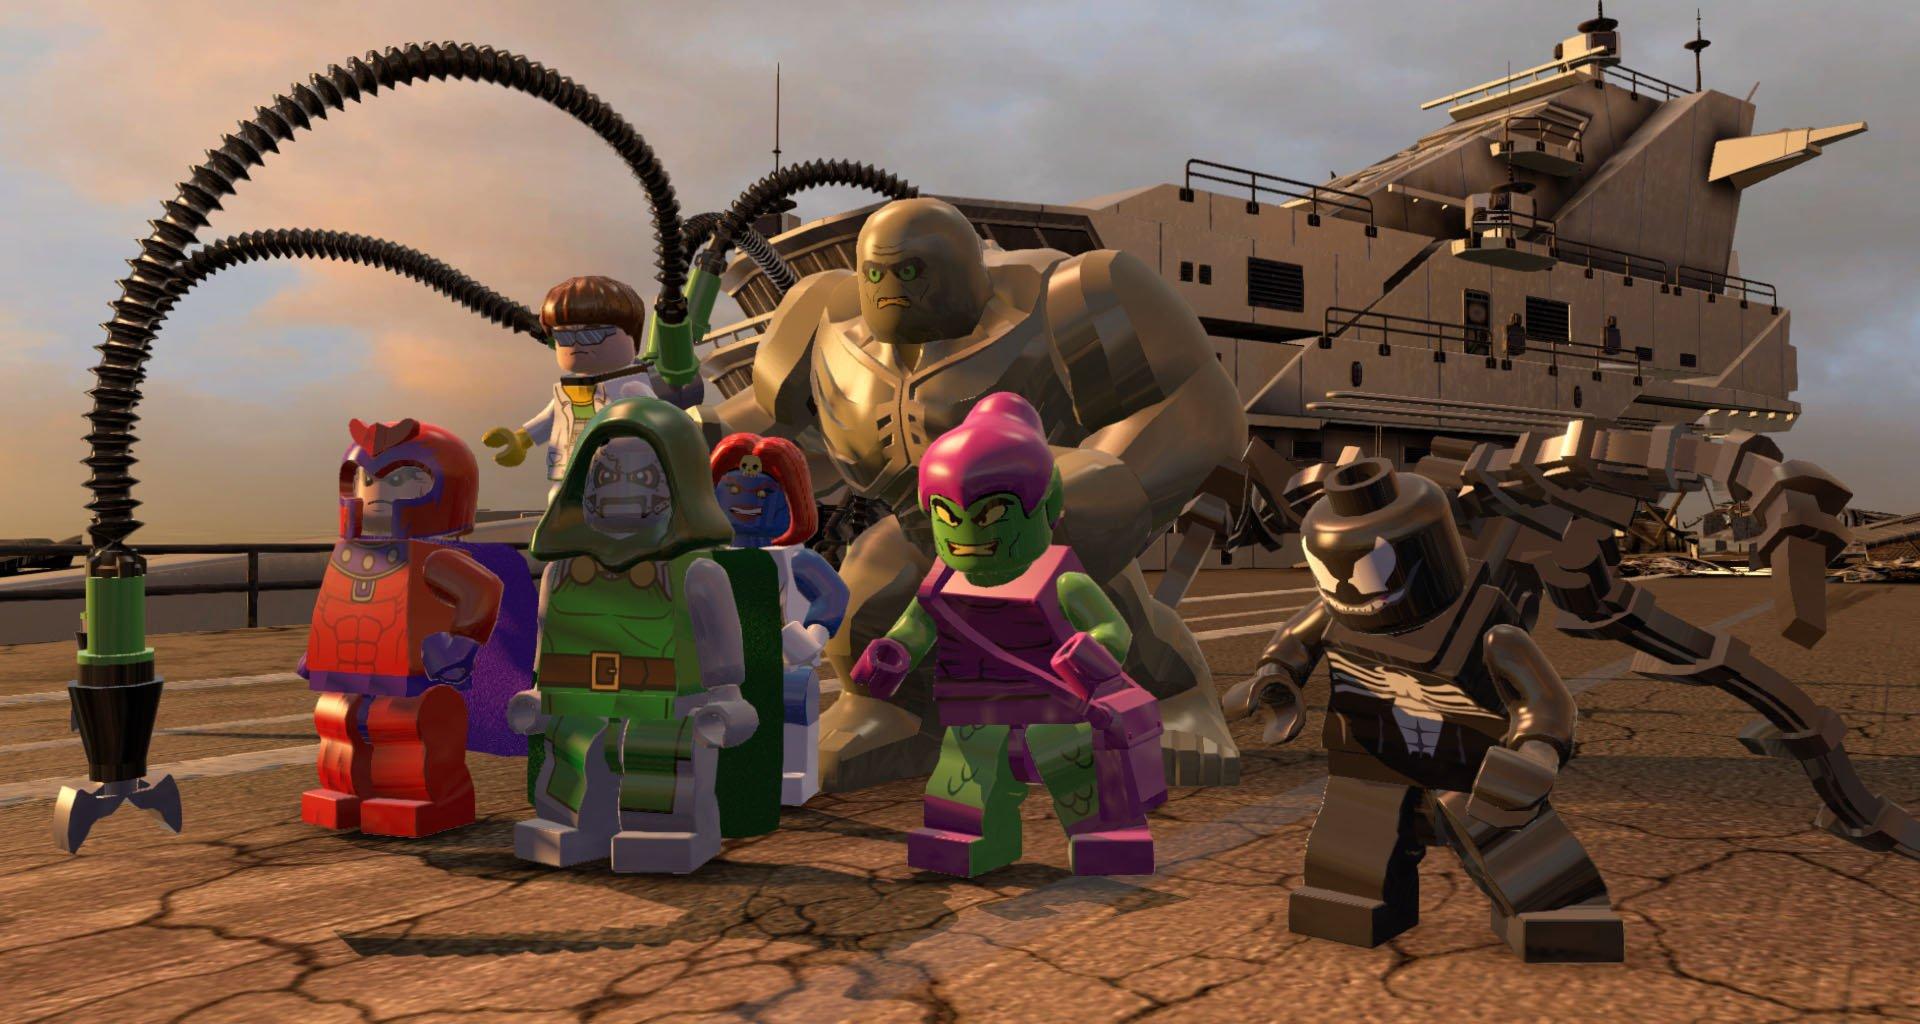 LEGO Marvel Super Heroes - PlayStation 4